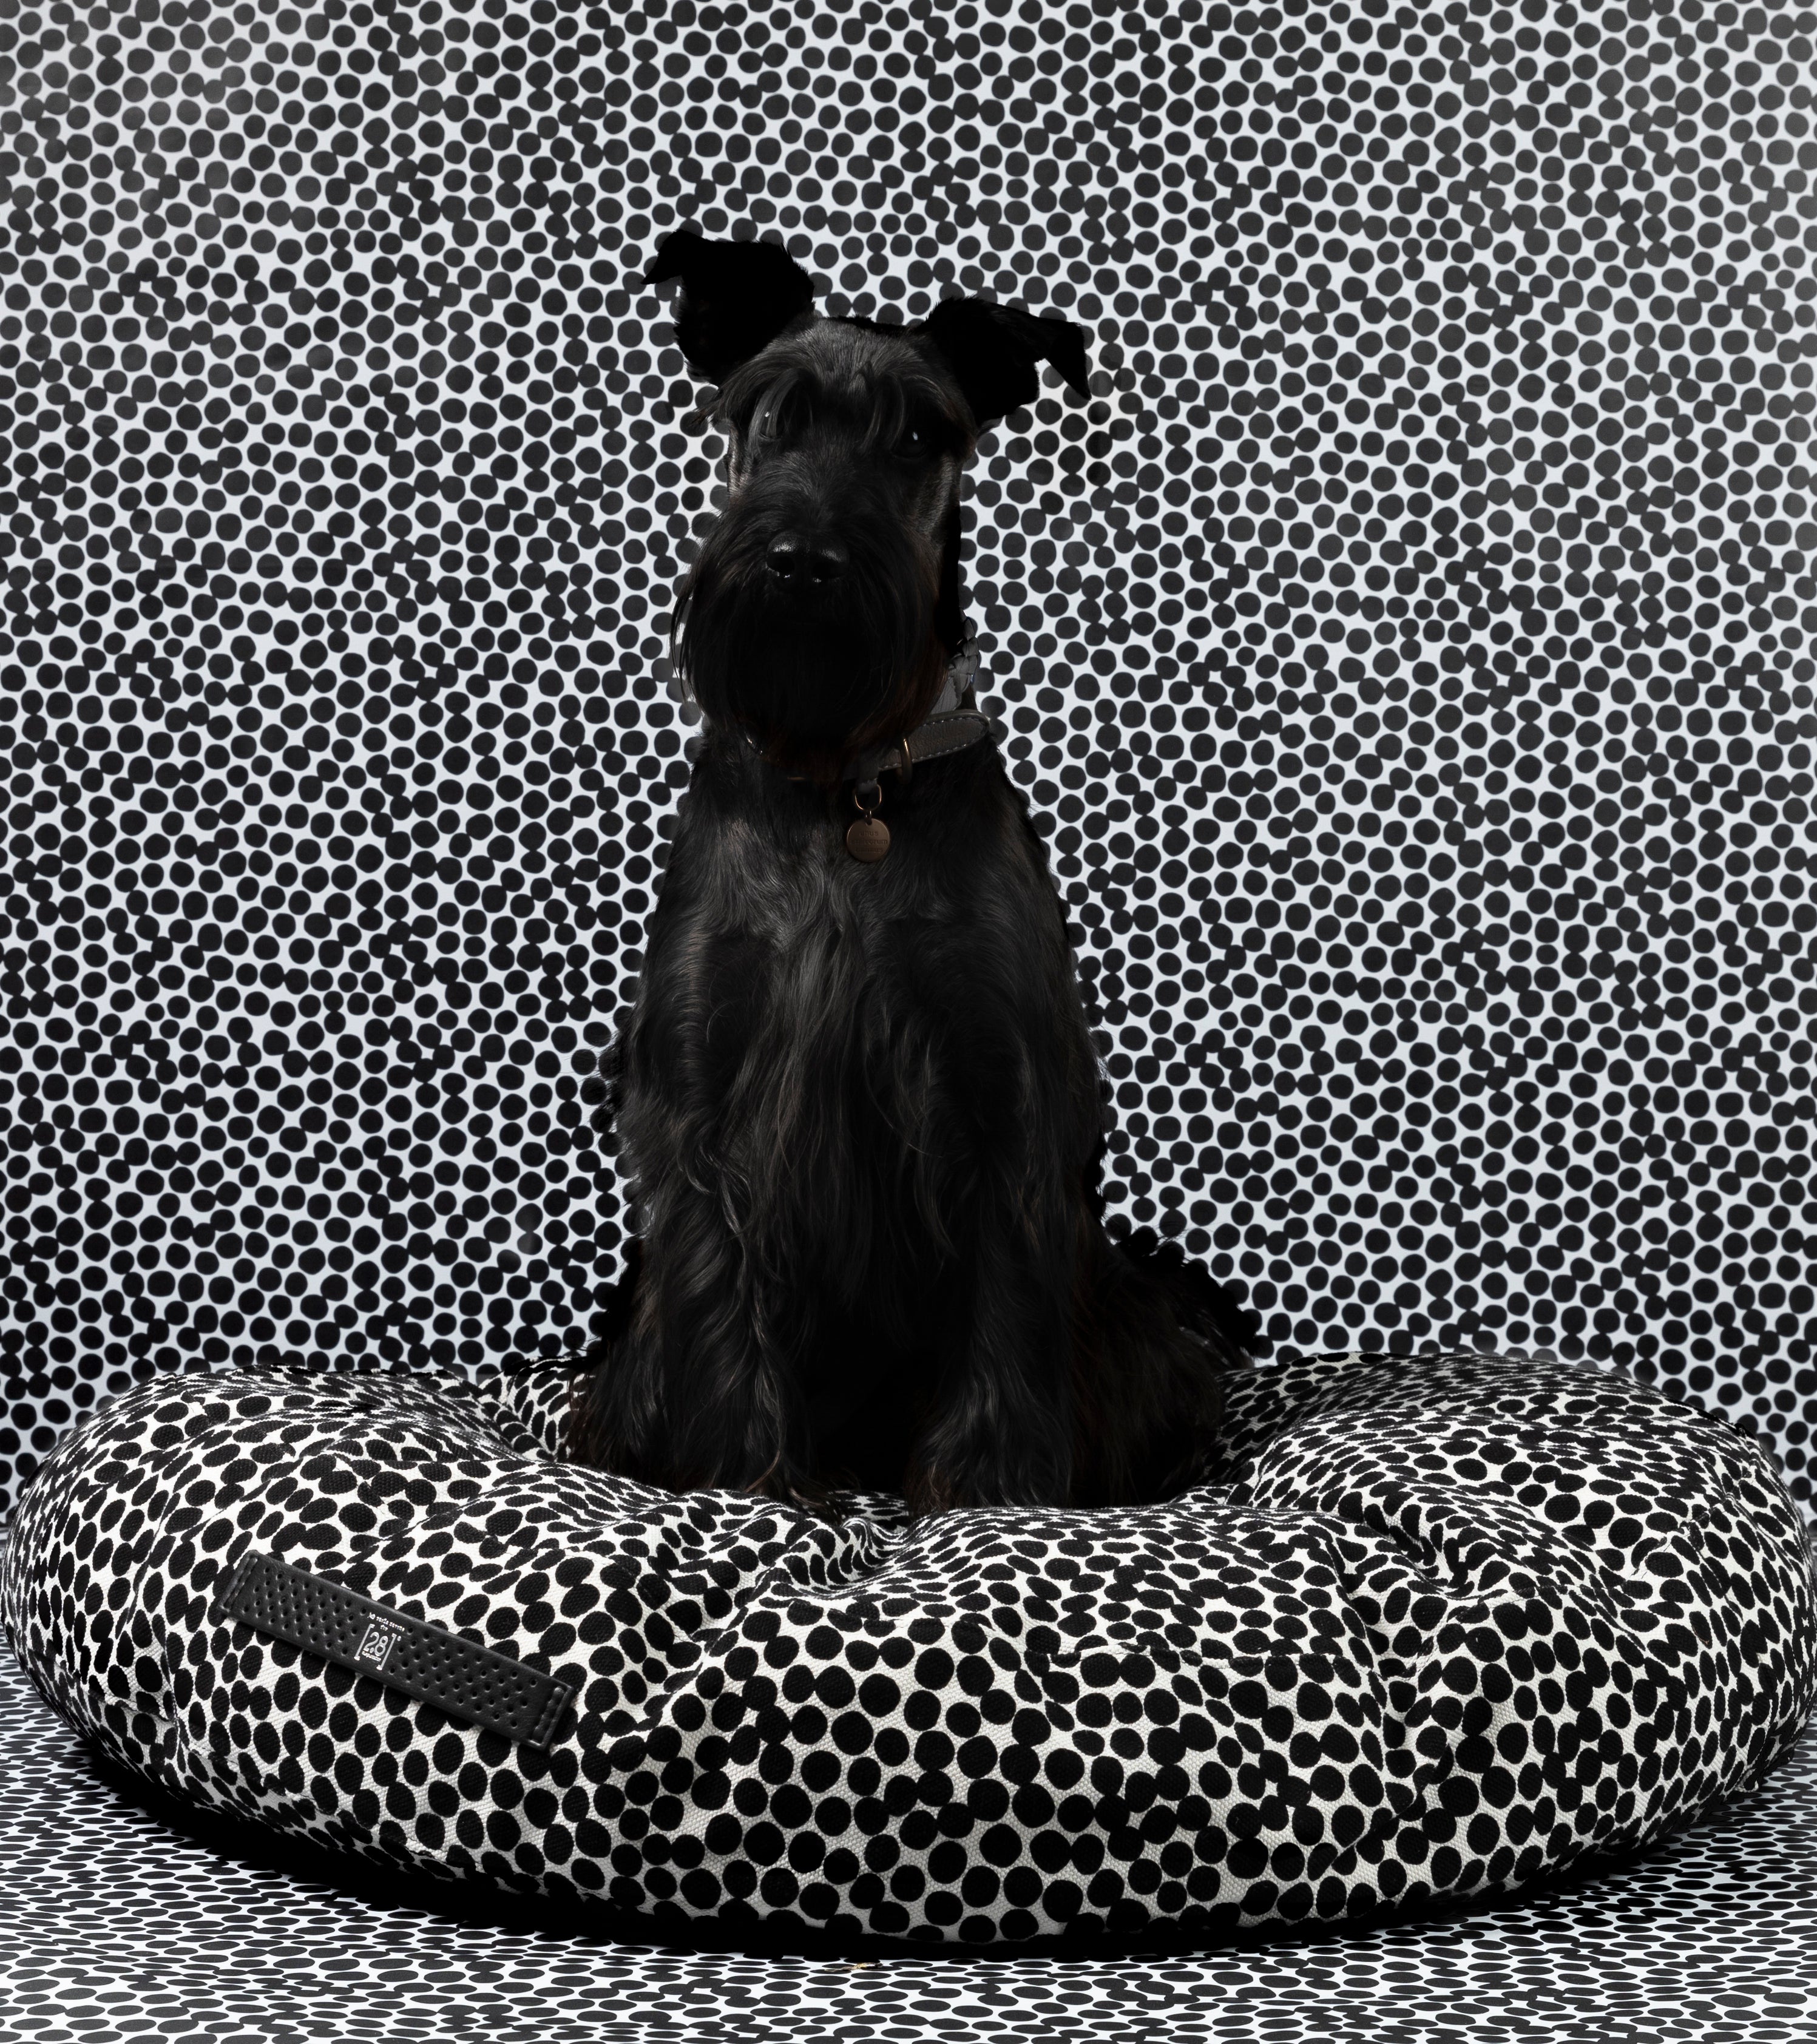 dots-paola-navone-dog-cushion.jpg